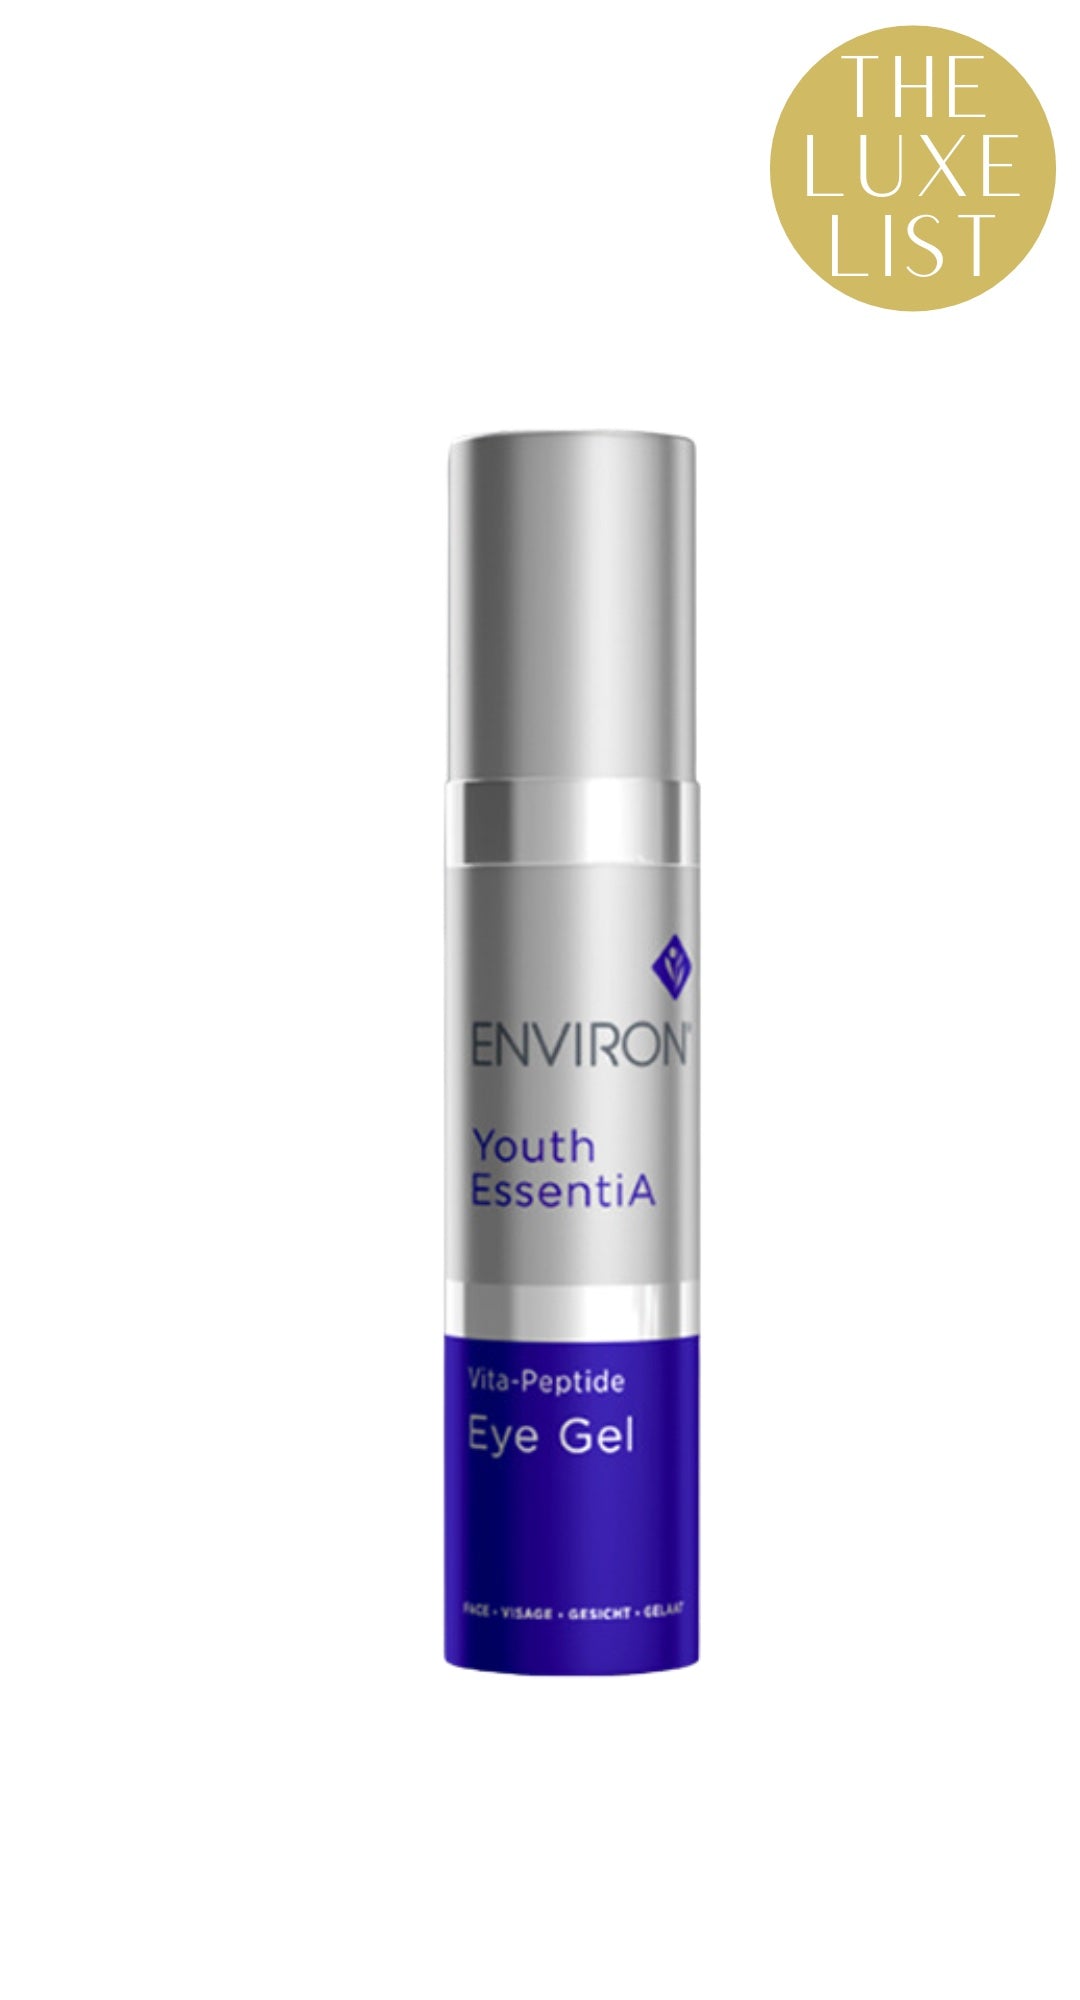 Vita-Peptide Eye Gel